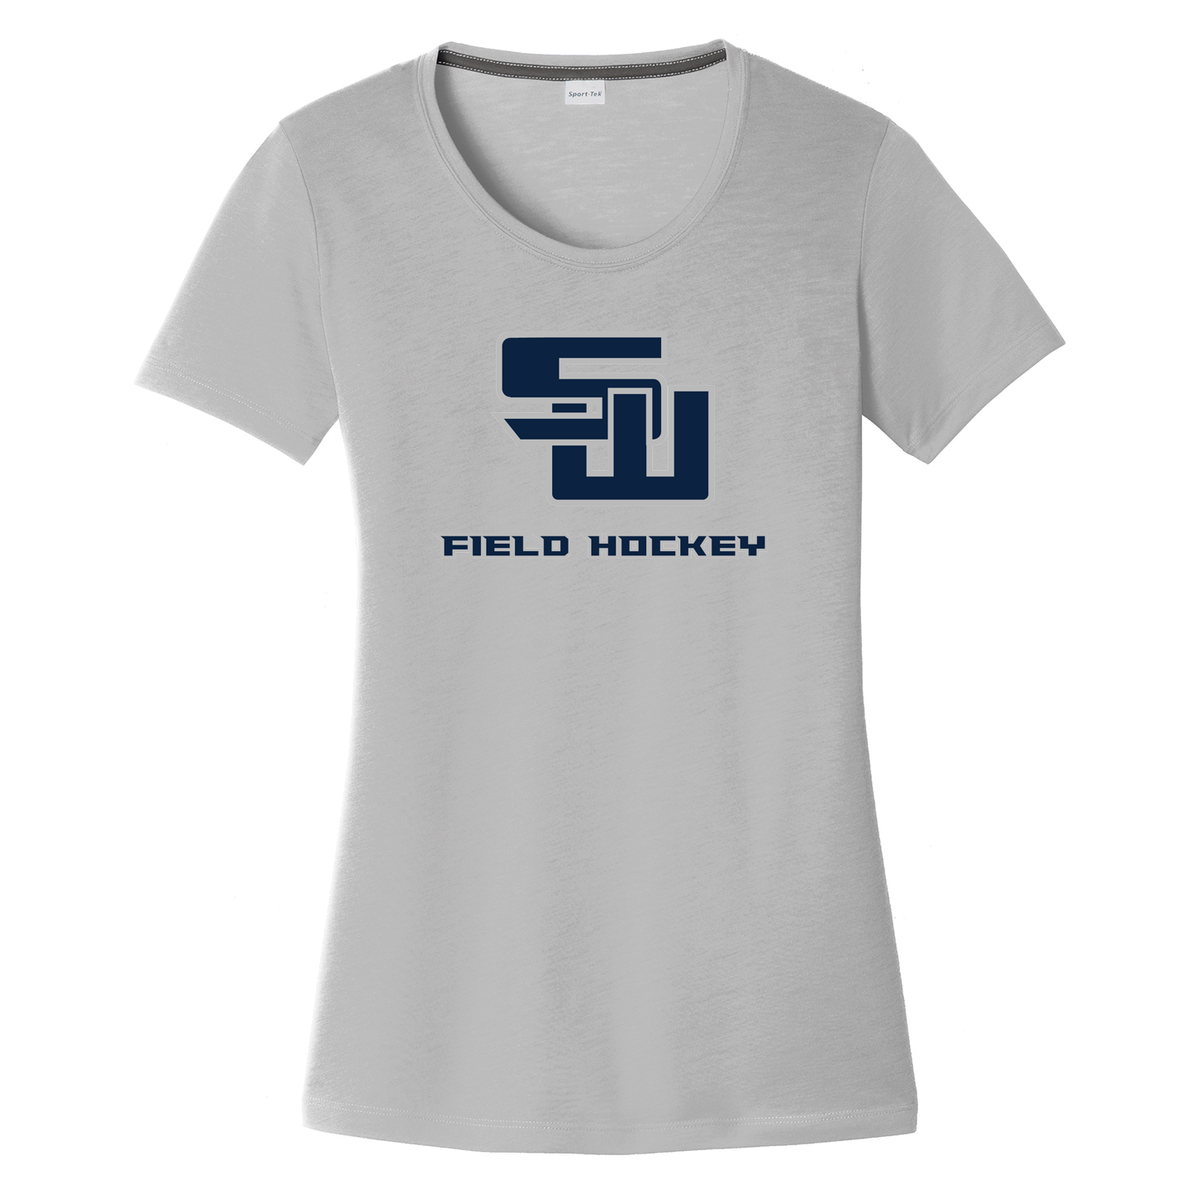 Smithtown West Field Hockey Women's CottonTouch Performance T-Shirt